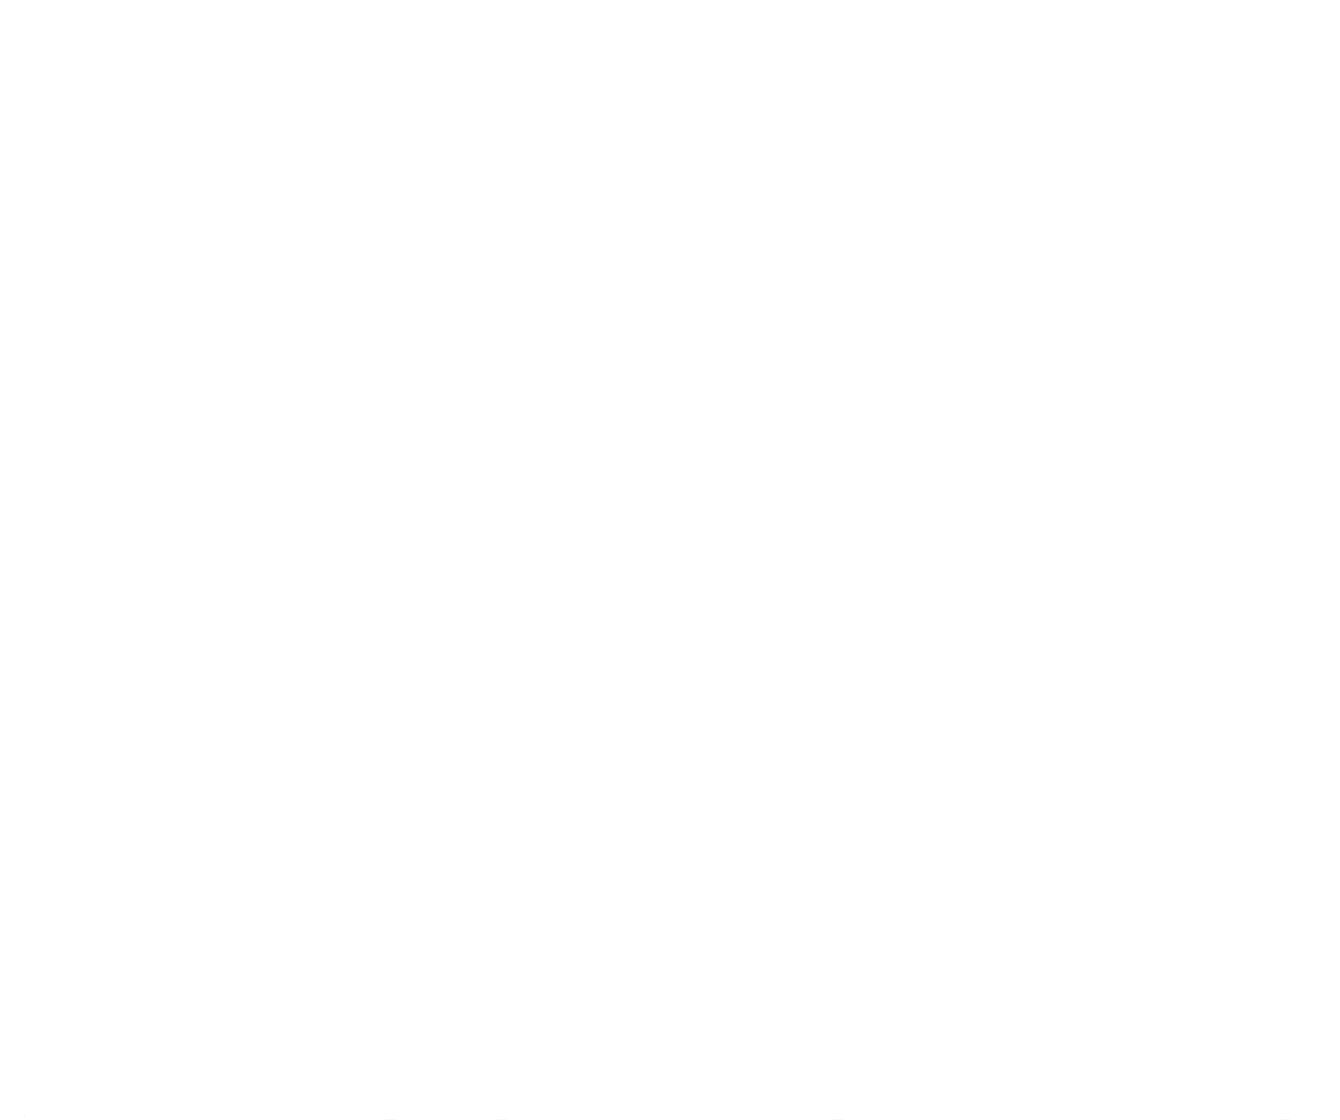 The Cliffs at Hocking Hills